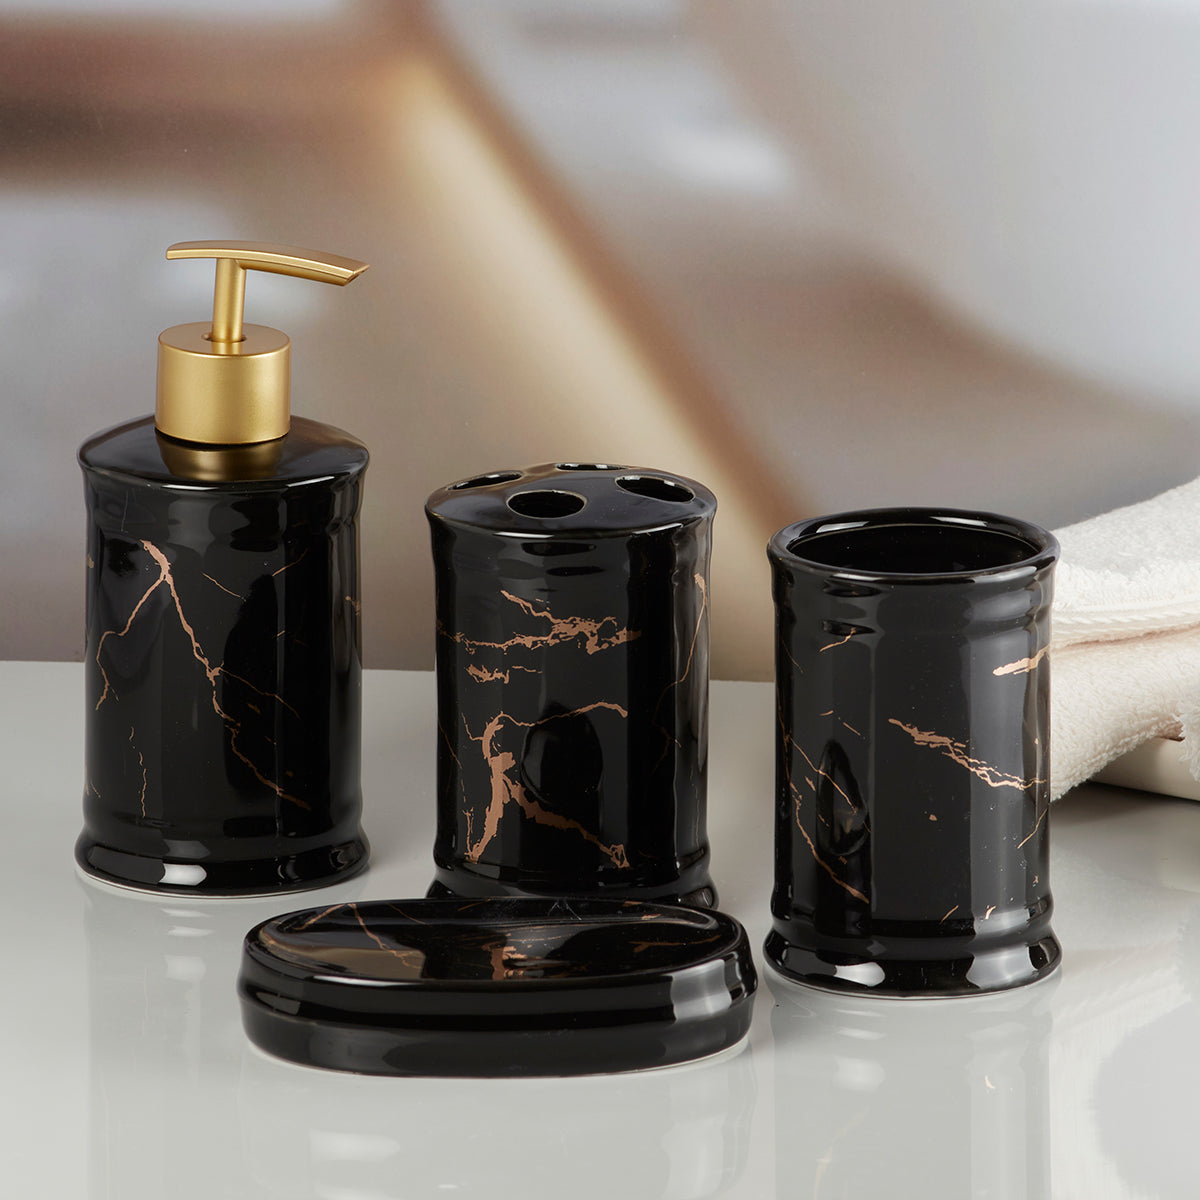 Ceramic Bathroom Accessories Set of 4 Bath Set with Soap Dispenser (8228)